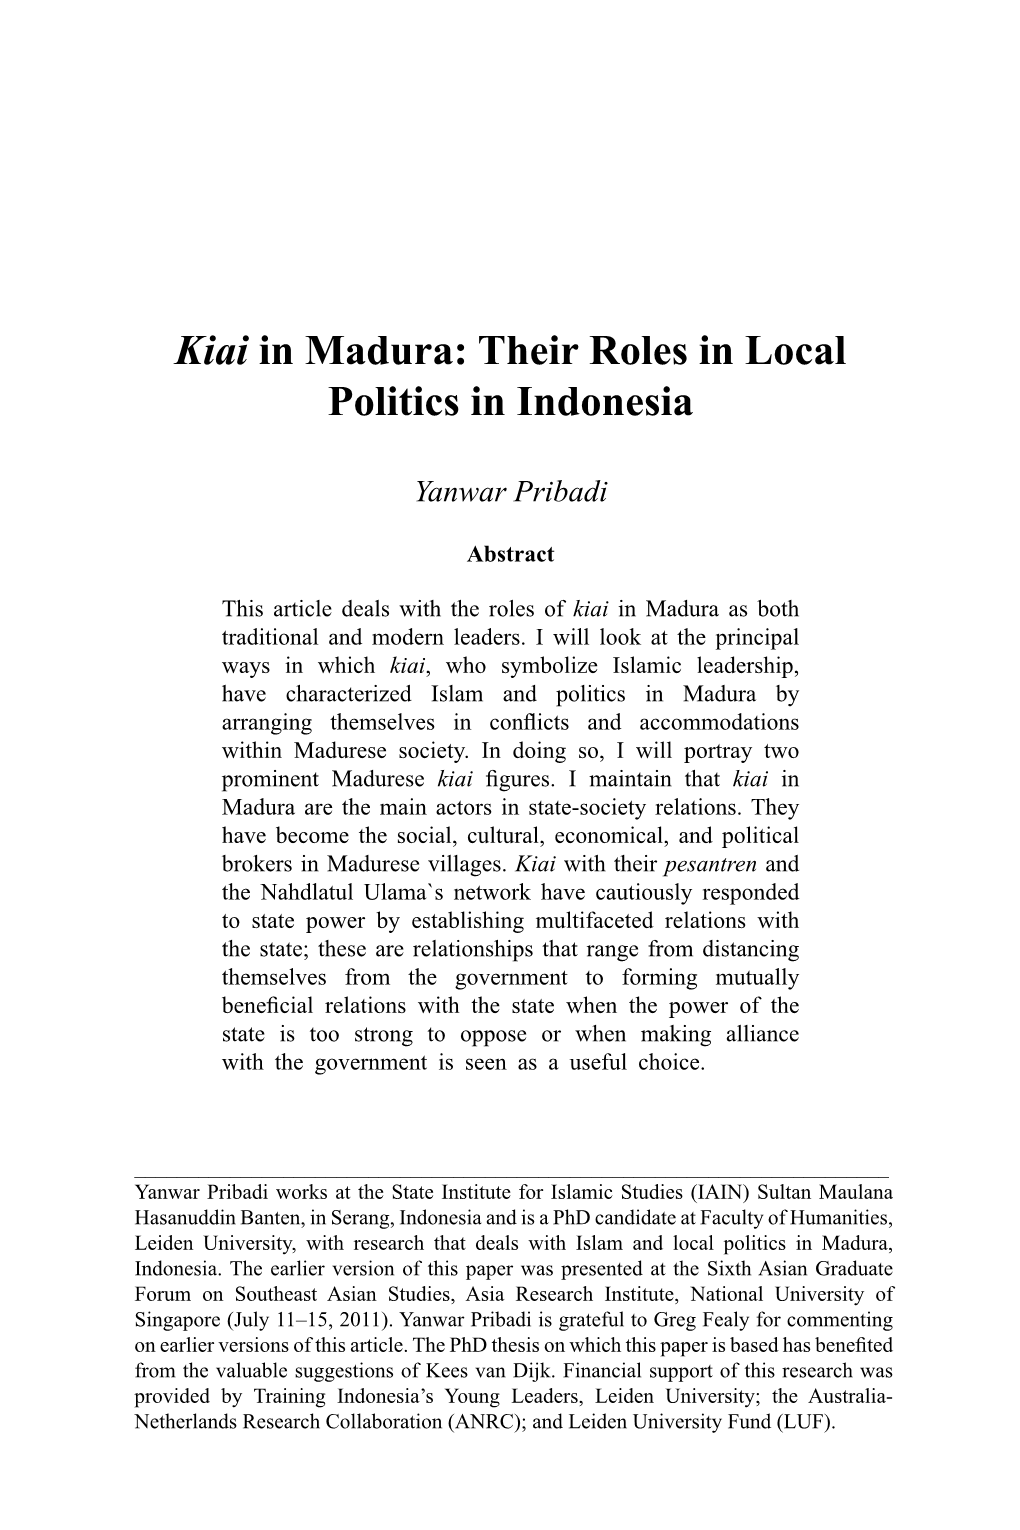 Kiai in Madura: Their Roles in Local Politics in Indonesia